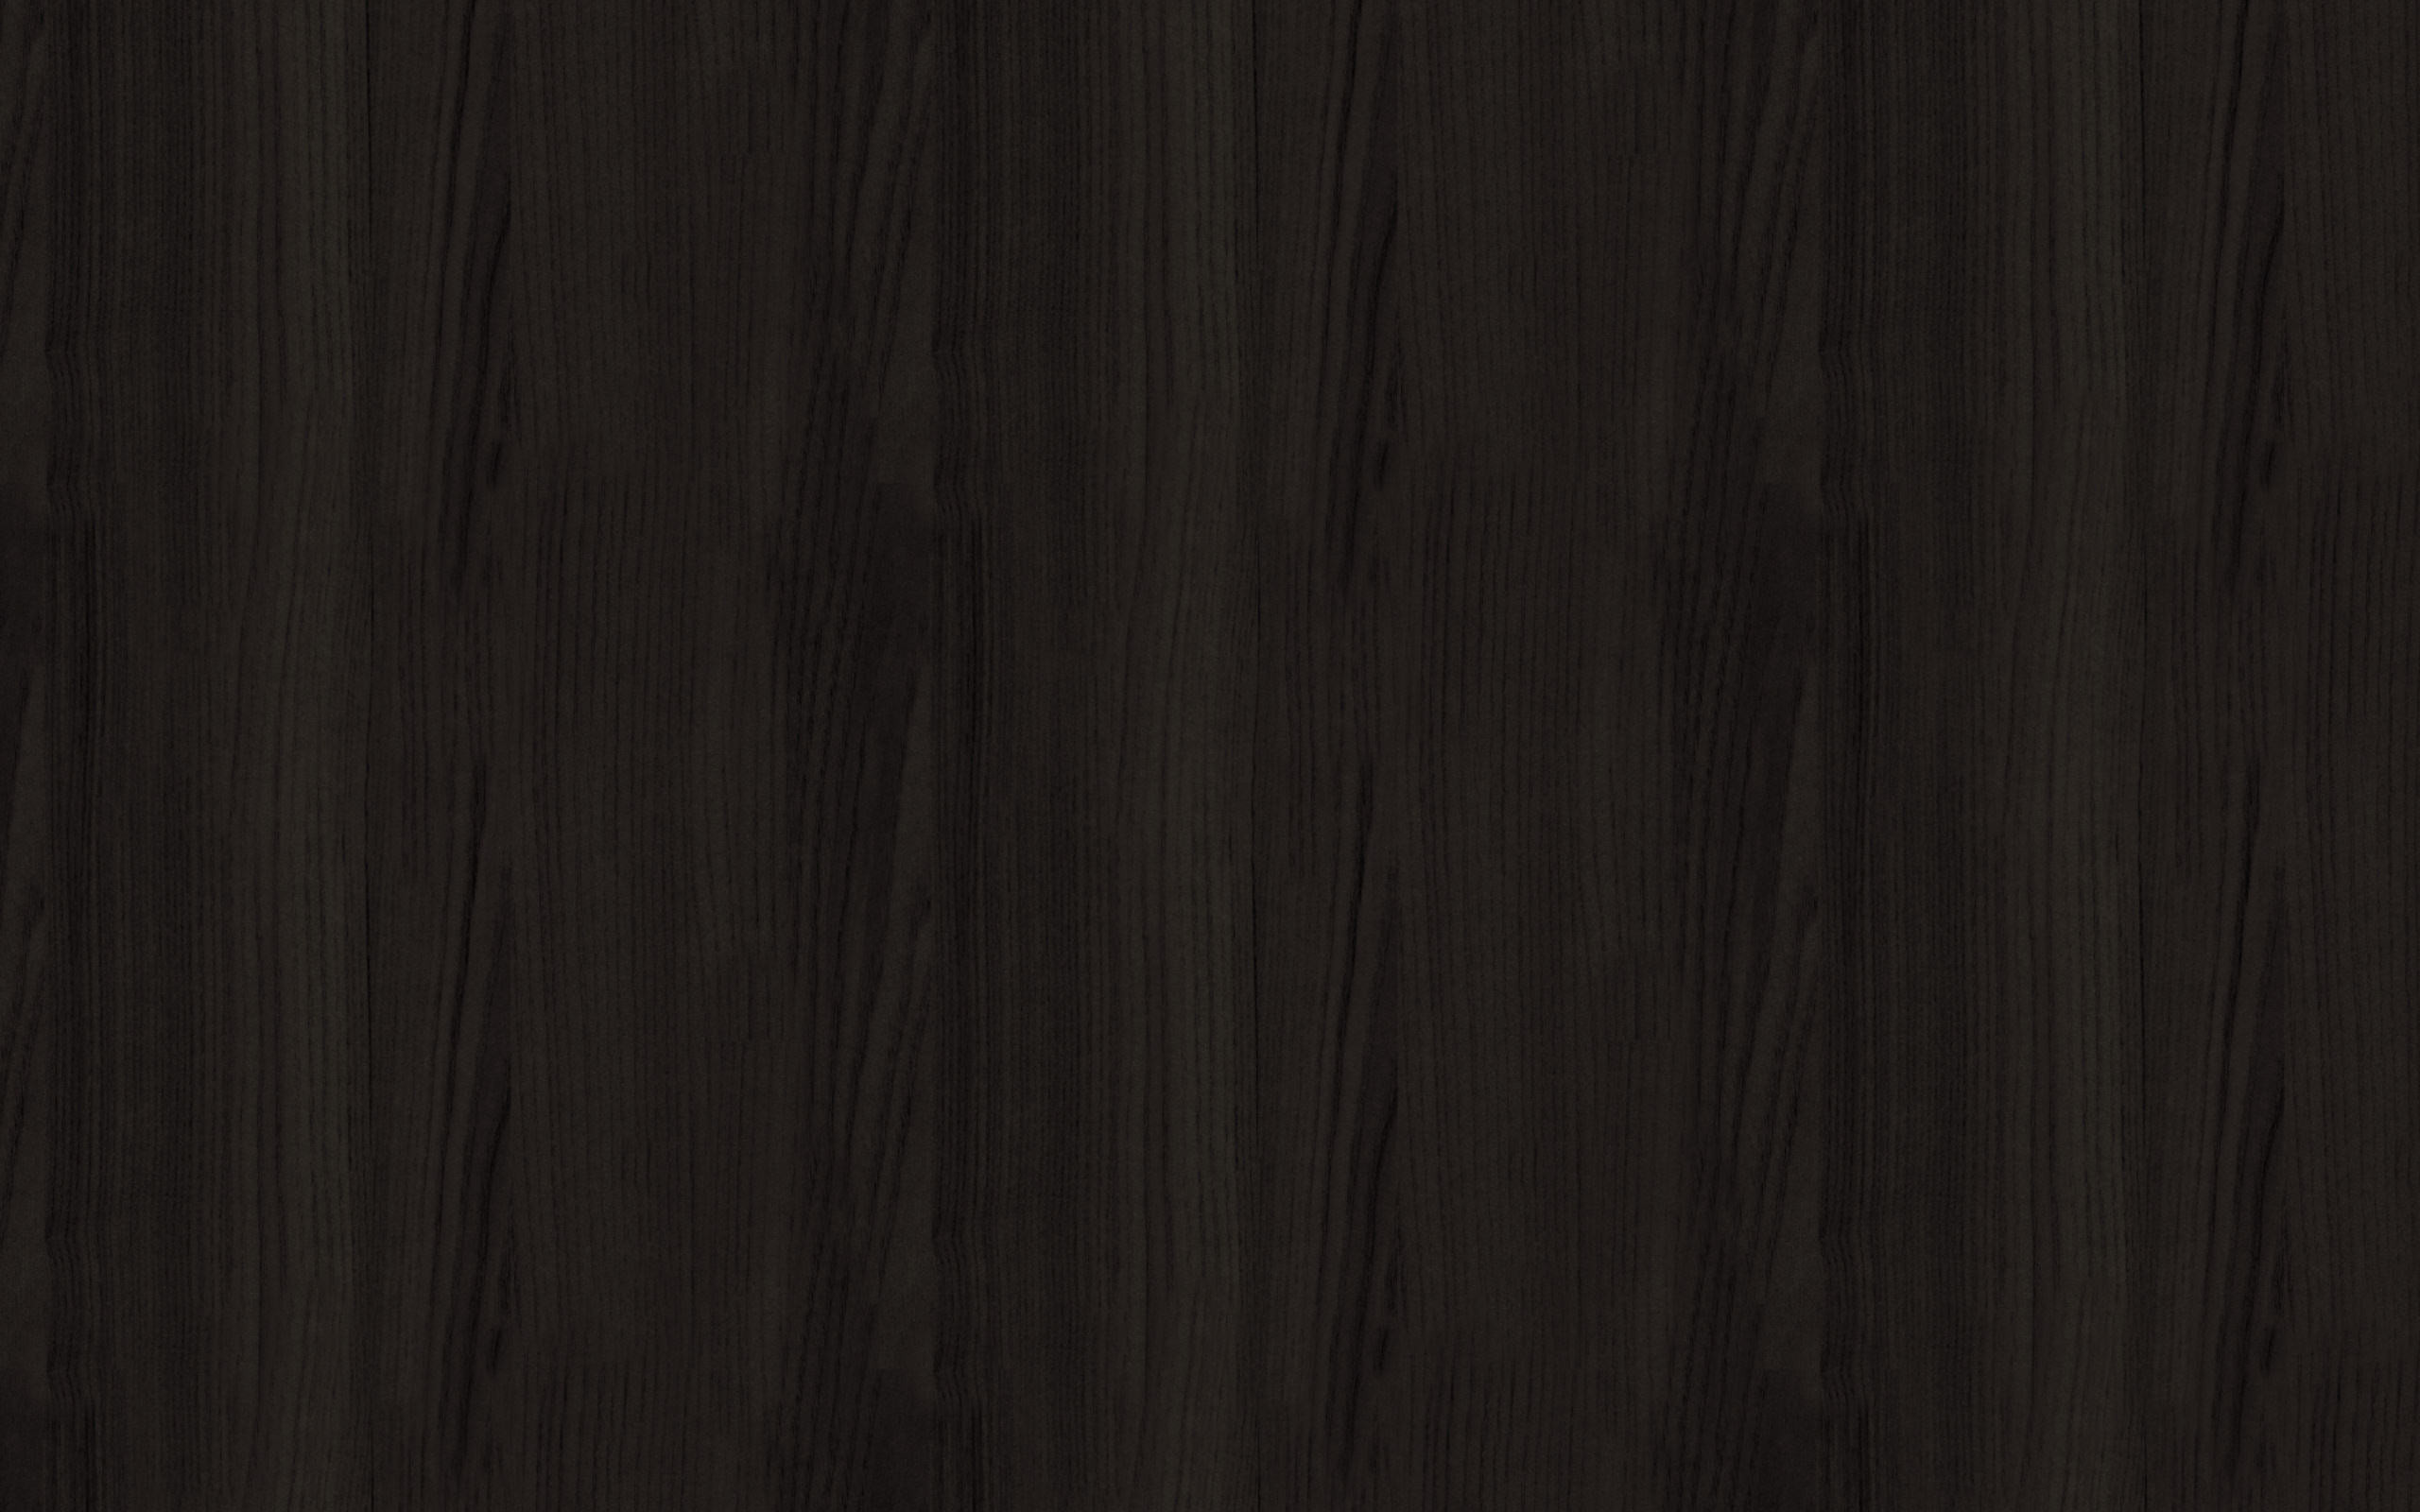 2560x1600 High Res Wood Desktop Background